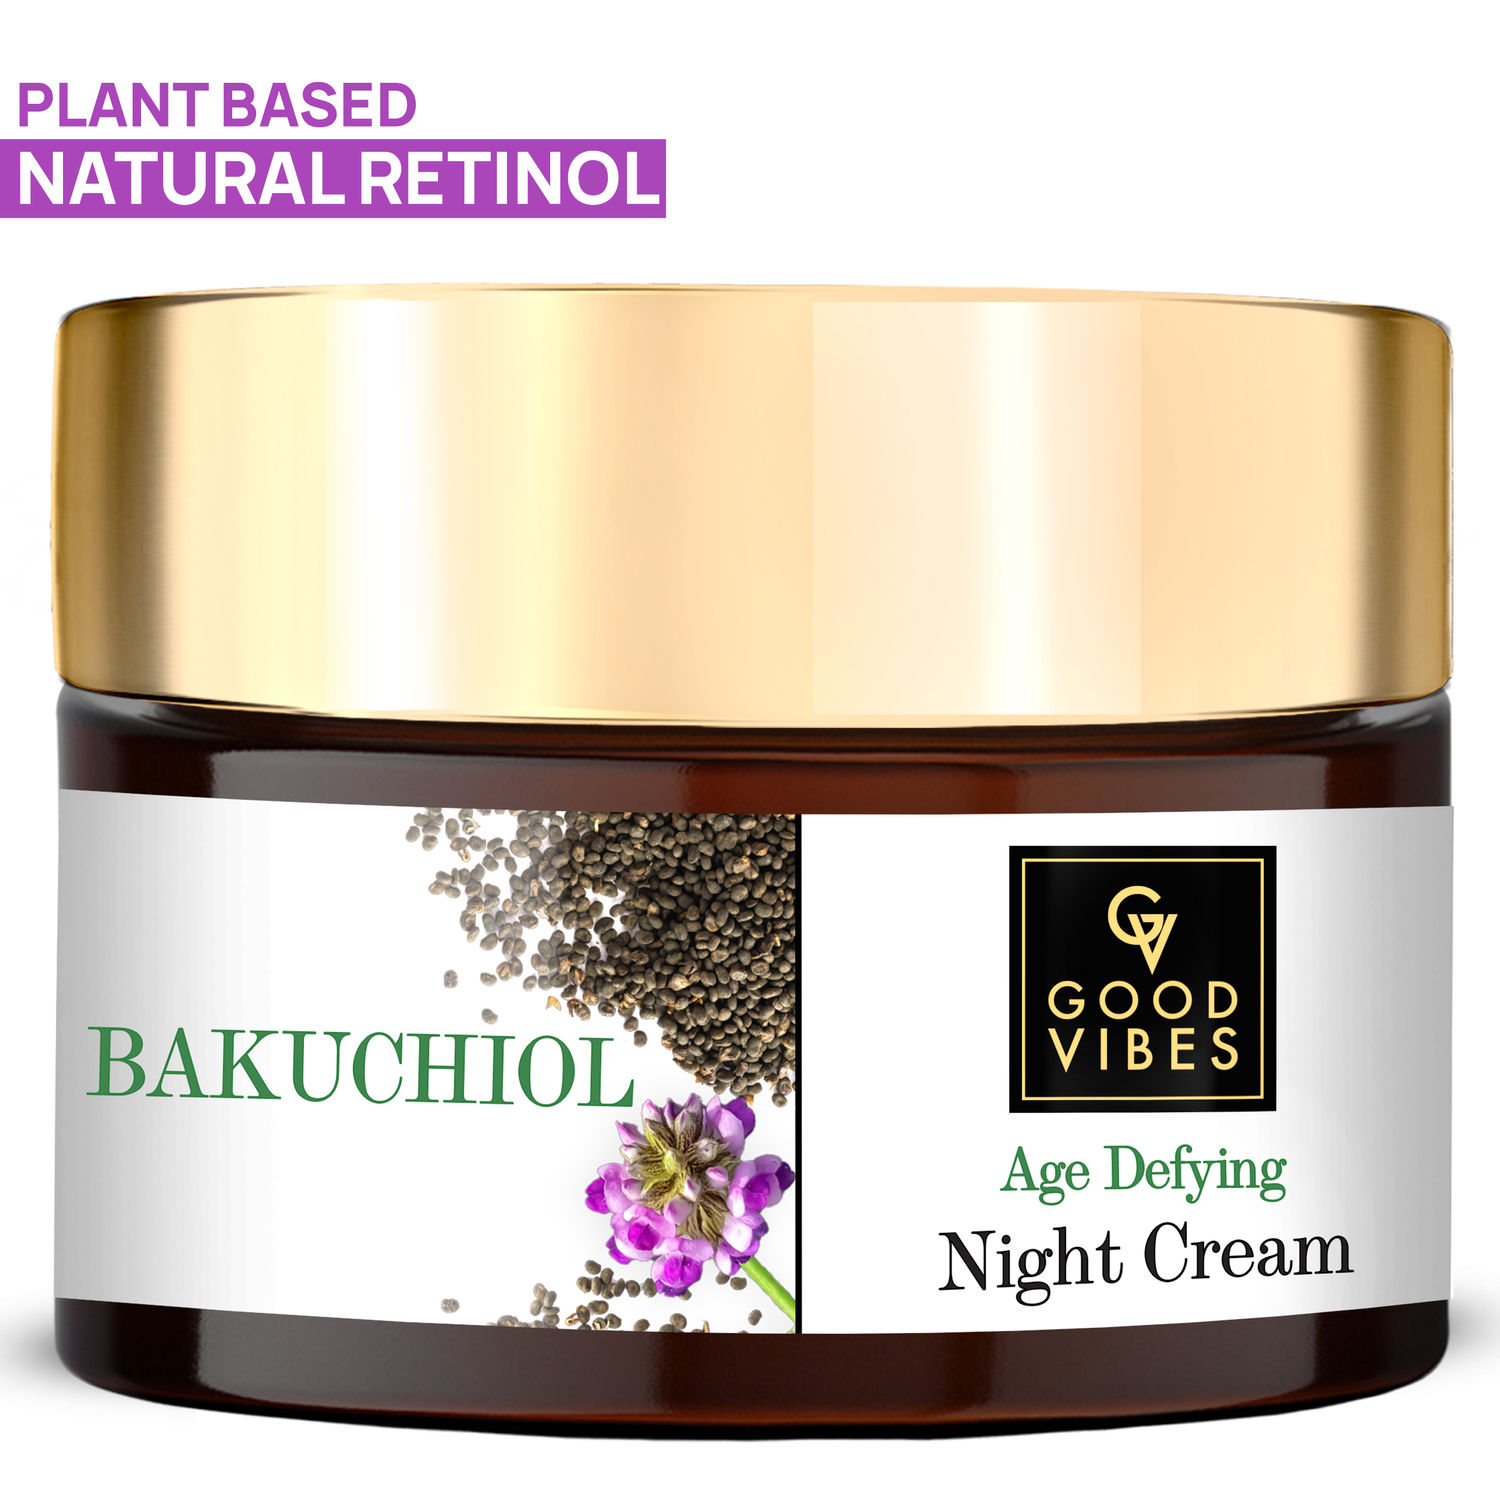 Good Vibes Bakuchiol Age Defying Night Cream |Natural Retinol, Anti-Aging, Wrinkle Control | No Parabens, No Mineral Oil, No Sulphates, No Animal Testing, Vegan (50g)